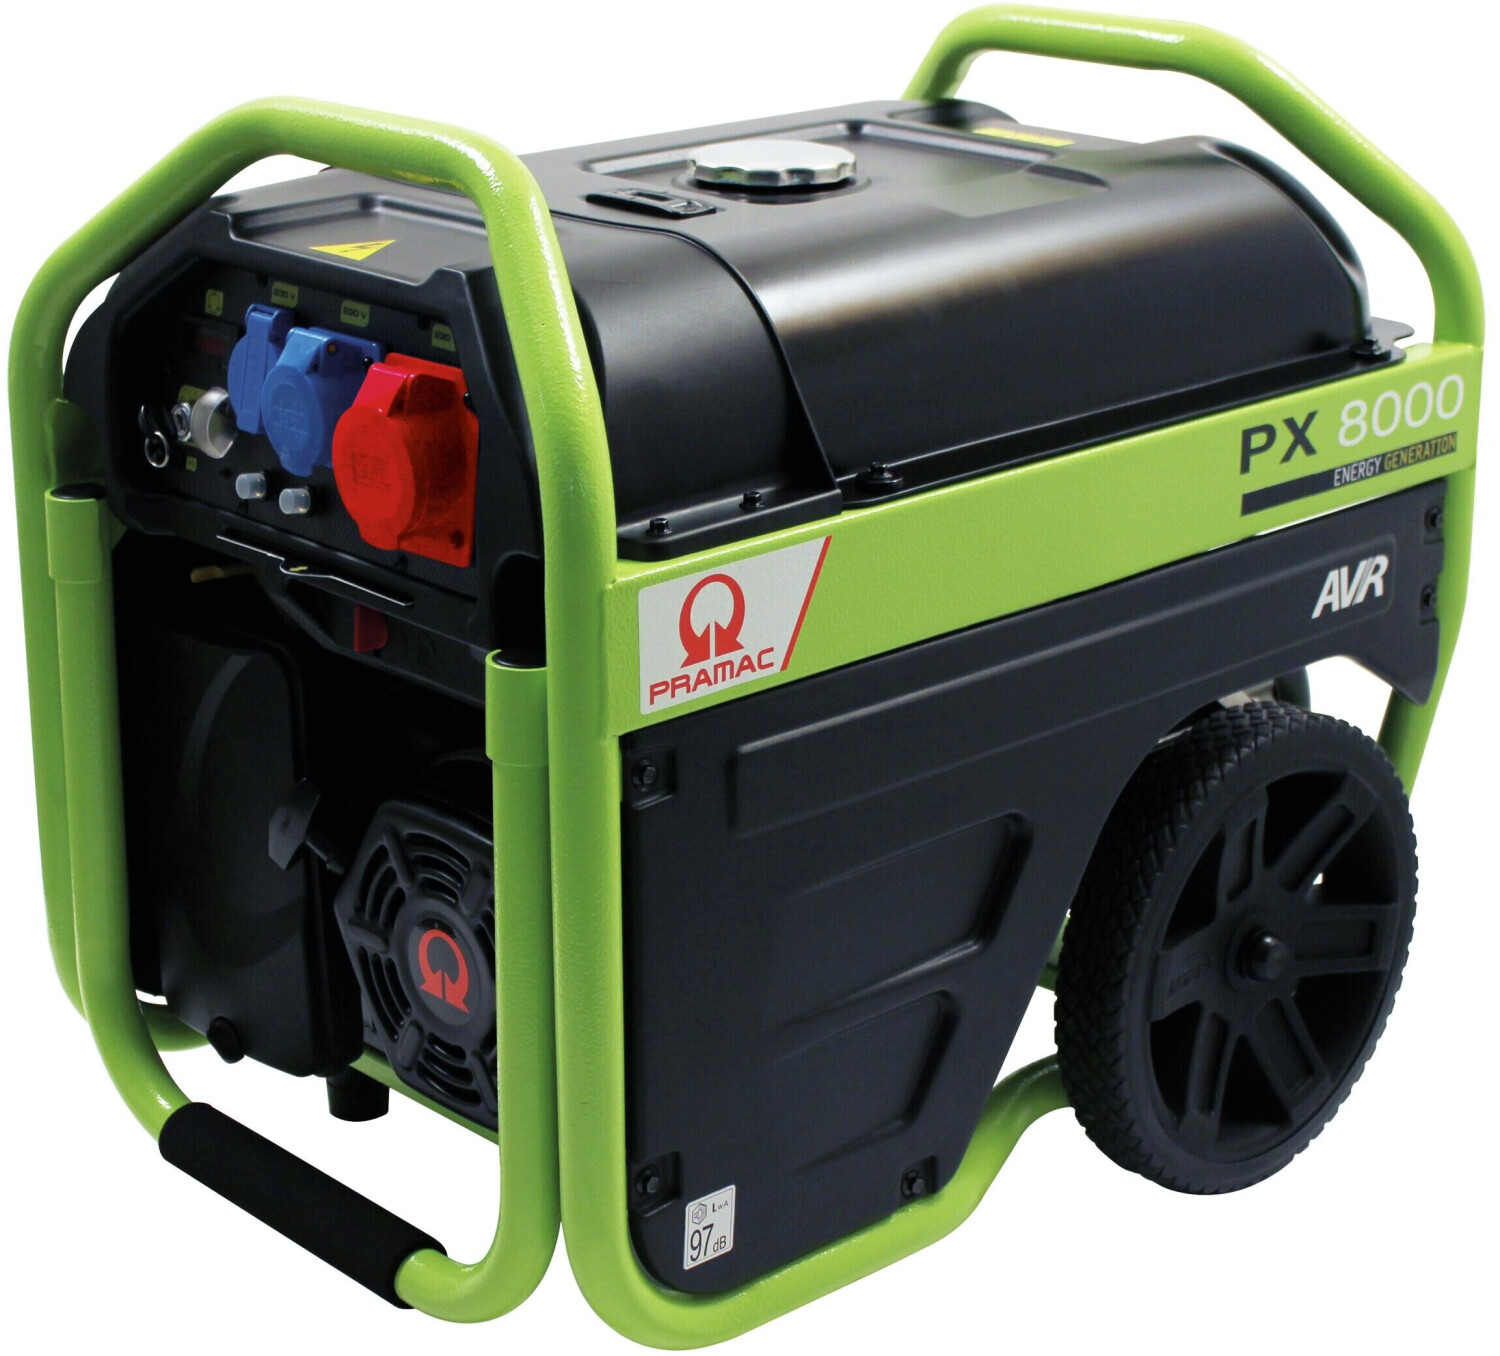 Practixx Benzin Stromerzeuger PX-SE-2100 Inverter